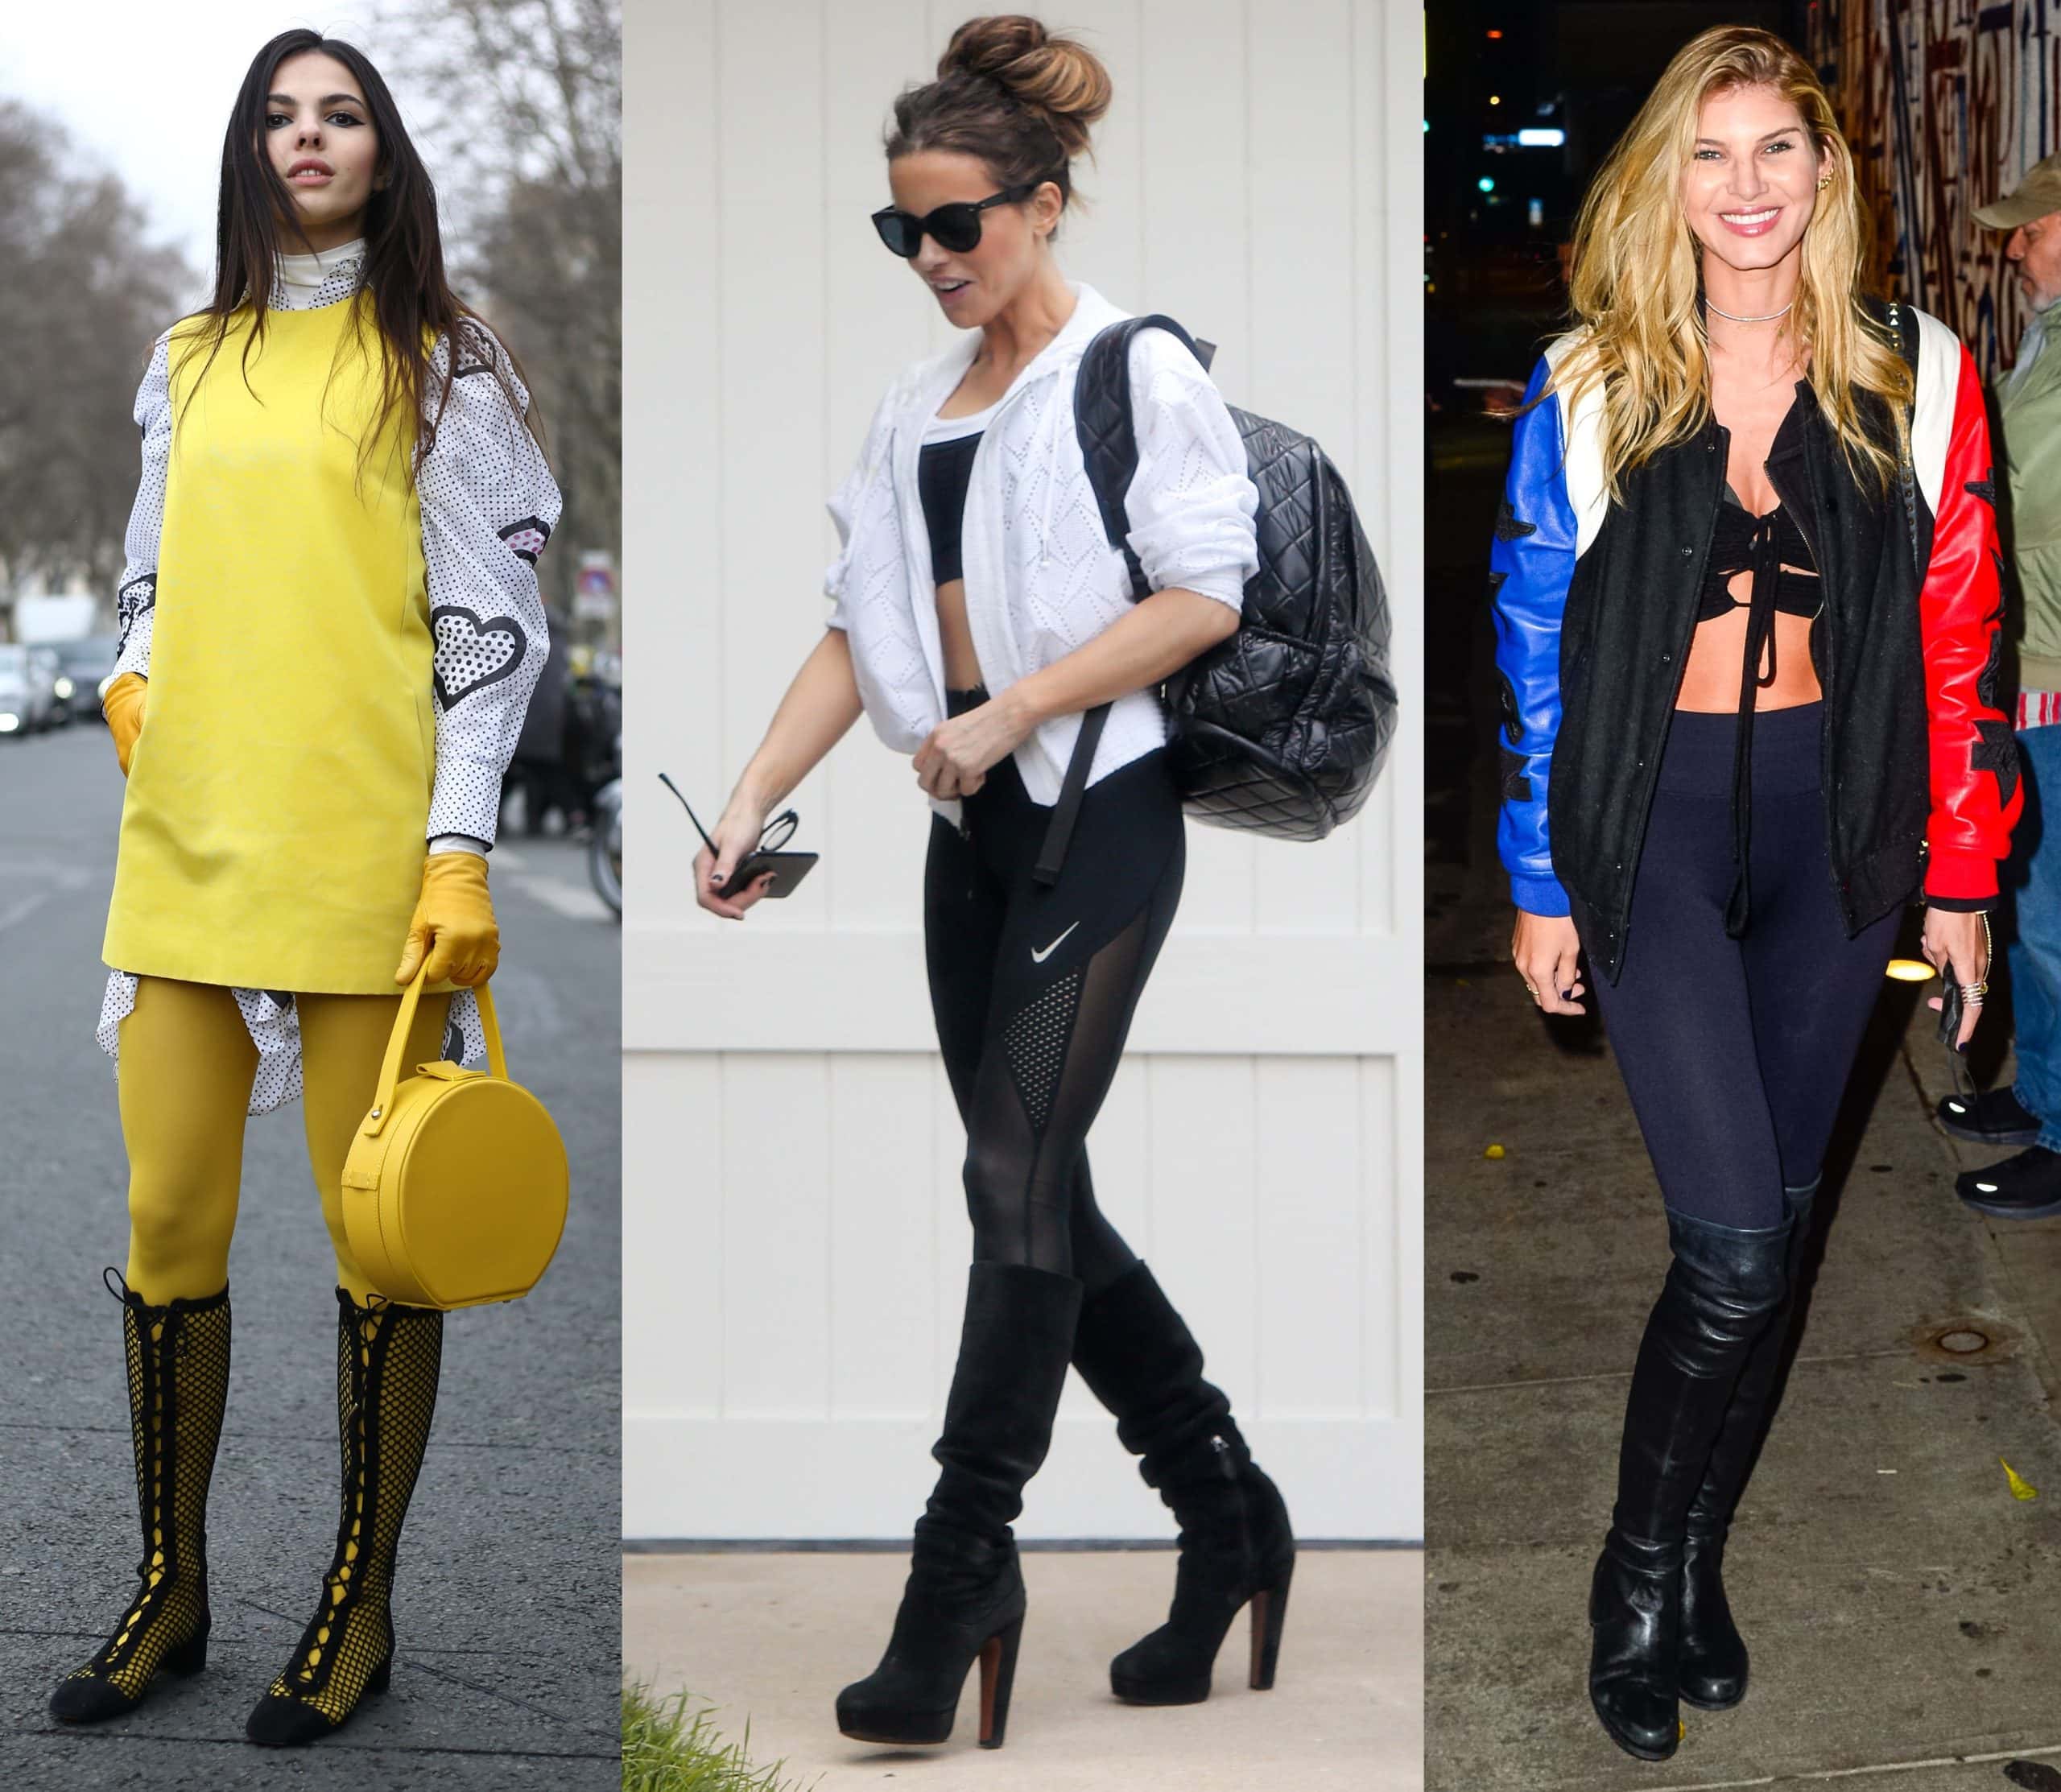 London-based fashion influencer Doina Ciobanu, English actress Kate Beckinsale, and American model Ashley Haas show three ways to wear knee-high boots with leggings